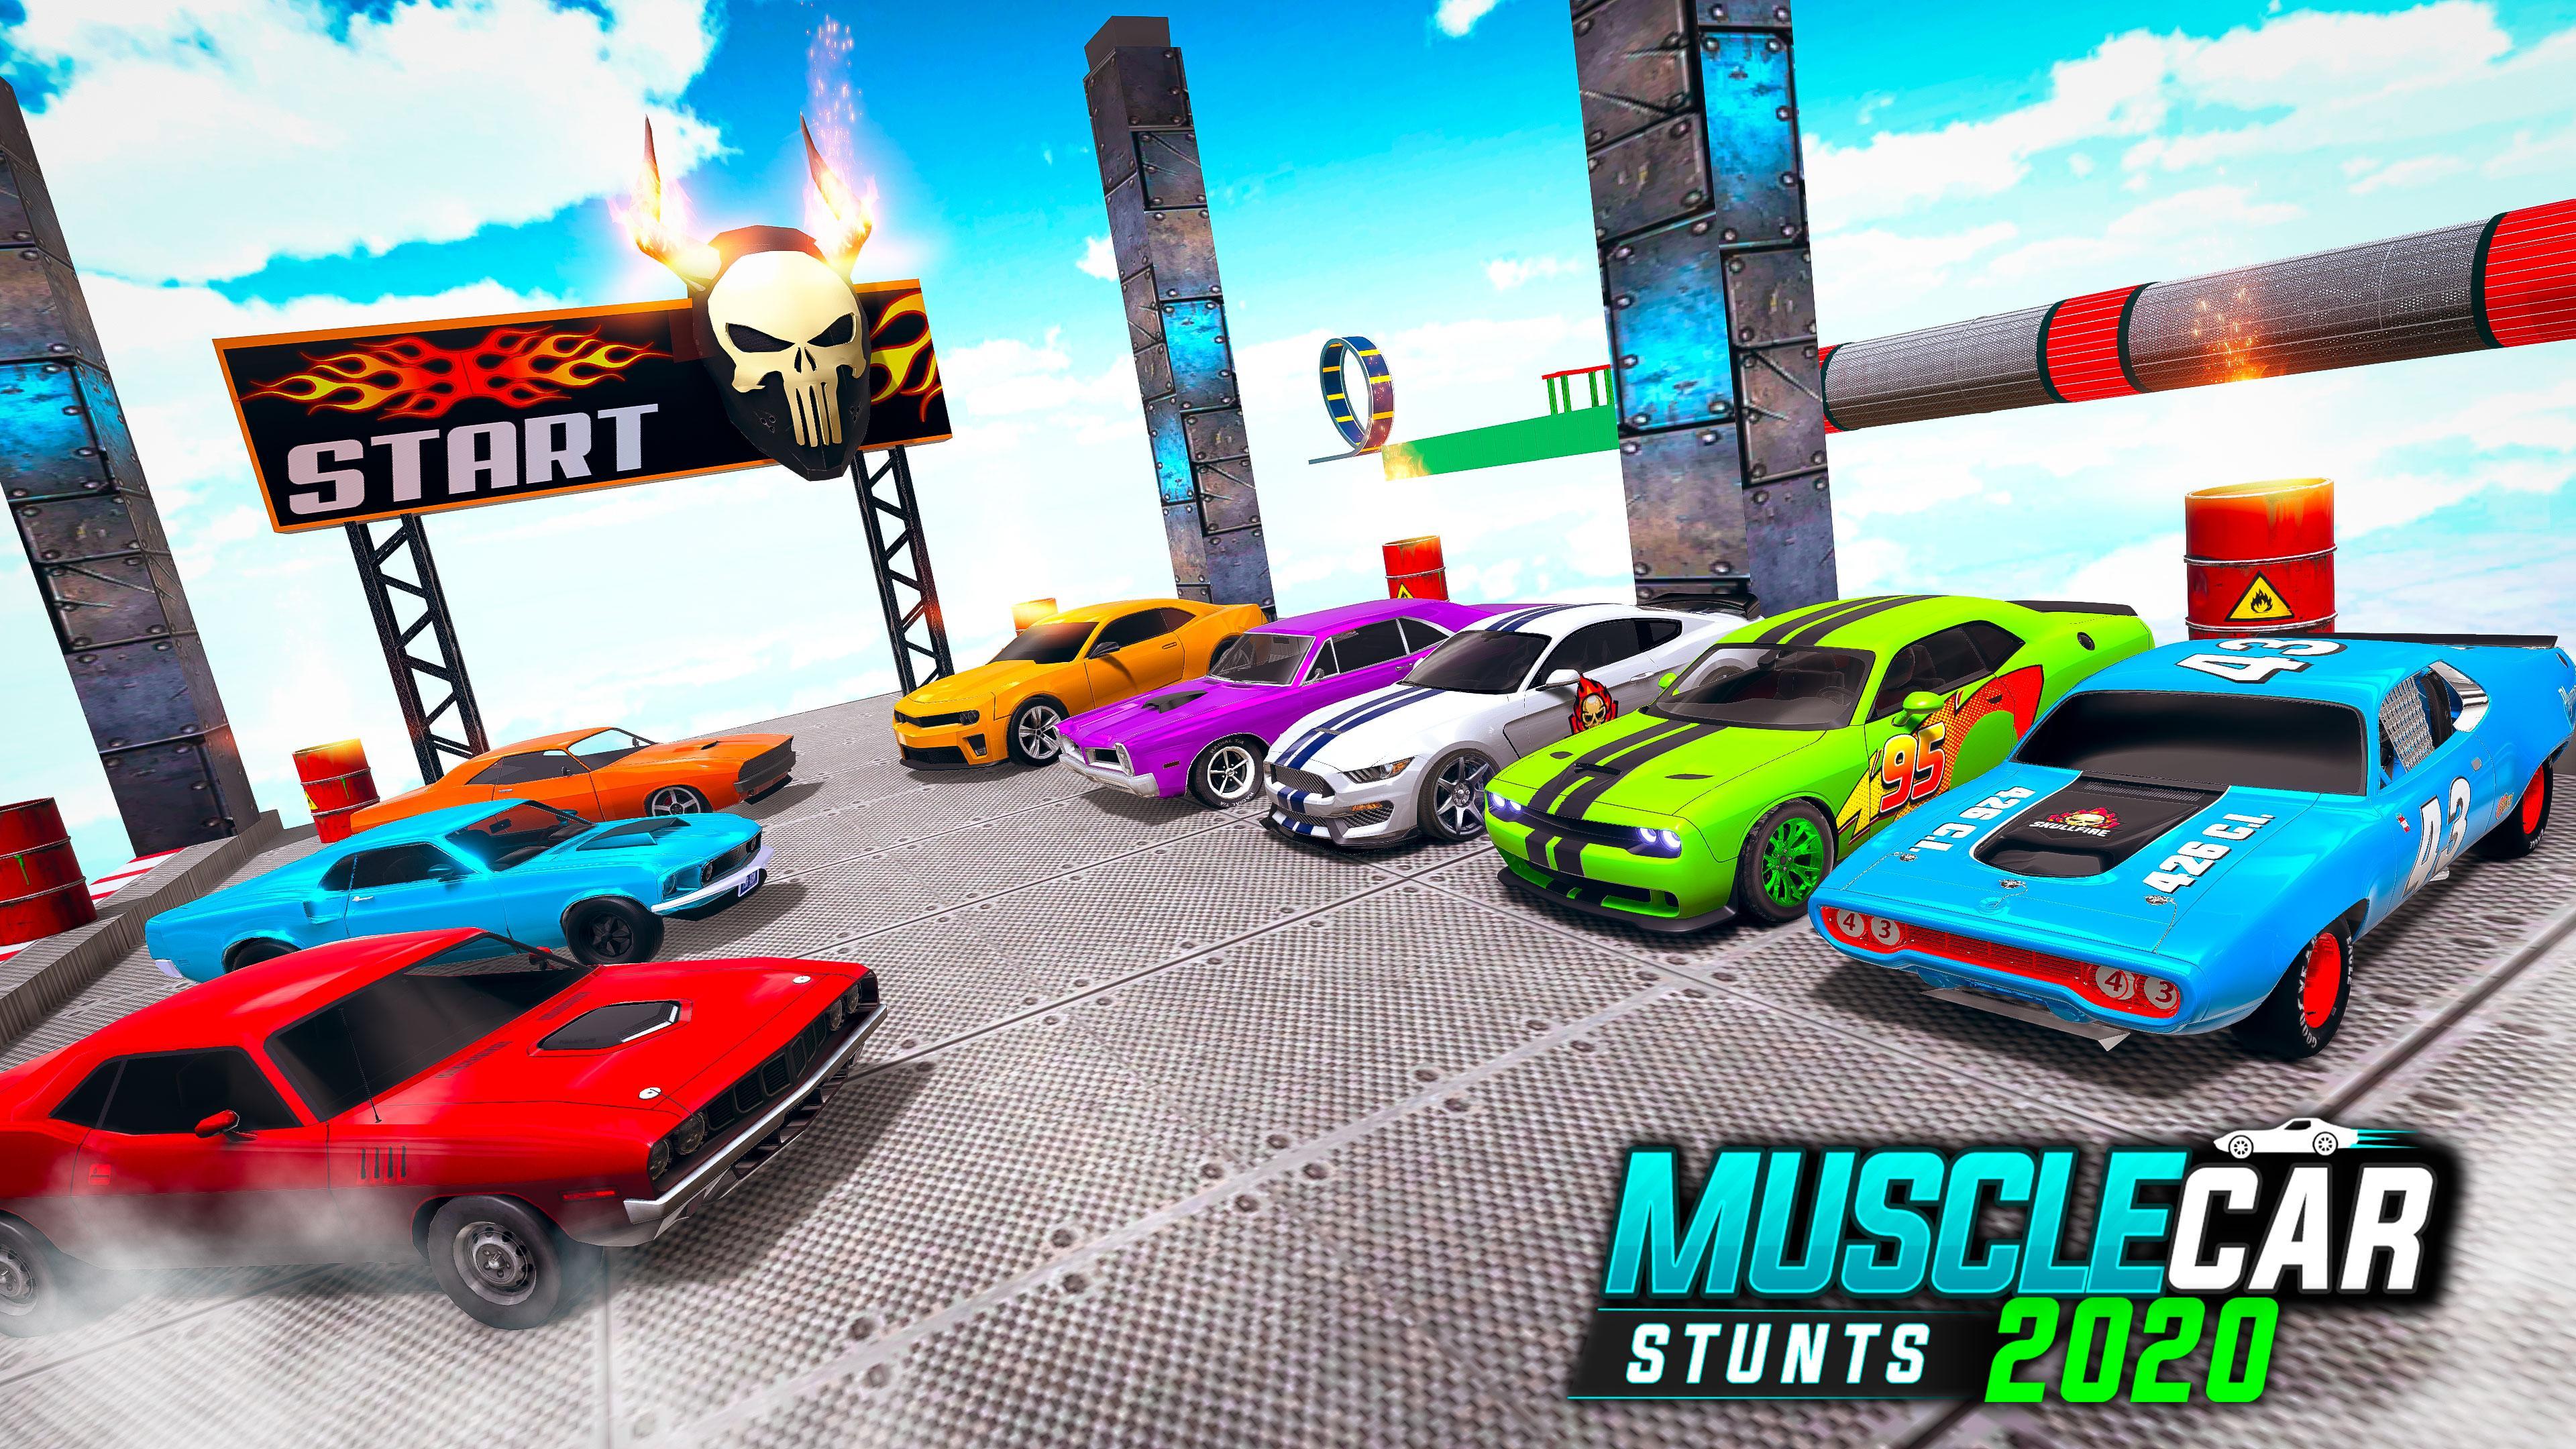 Muscle Car Stunts 2020 Mega Ramp Stunt Car Games 1.0.9 Screenshot 12